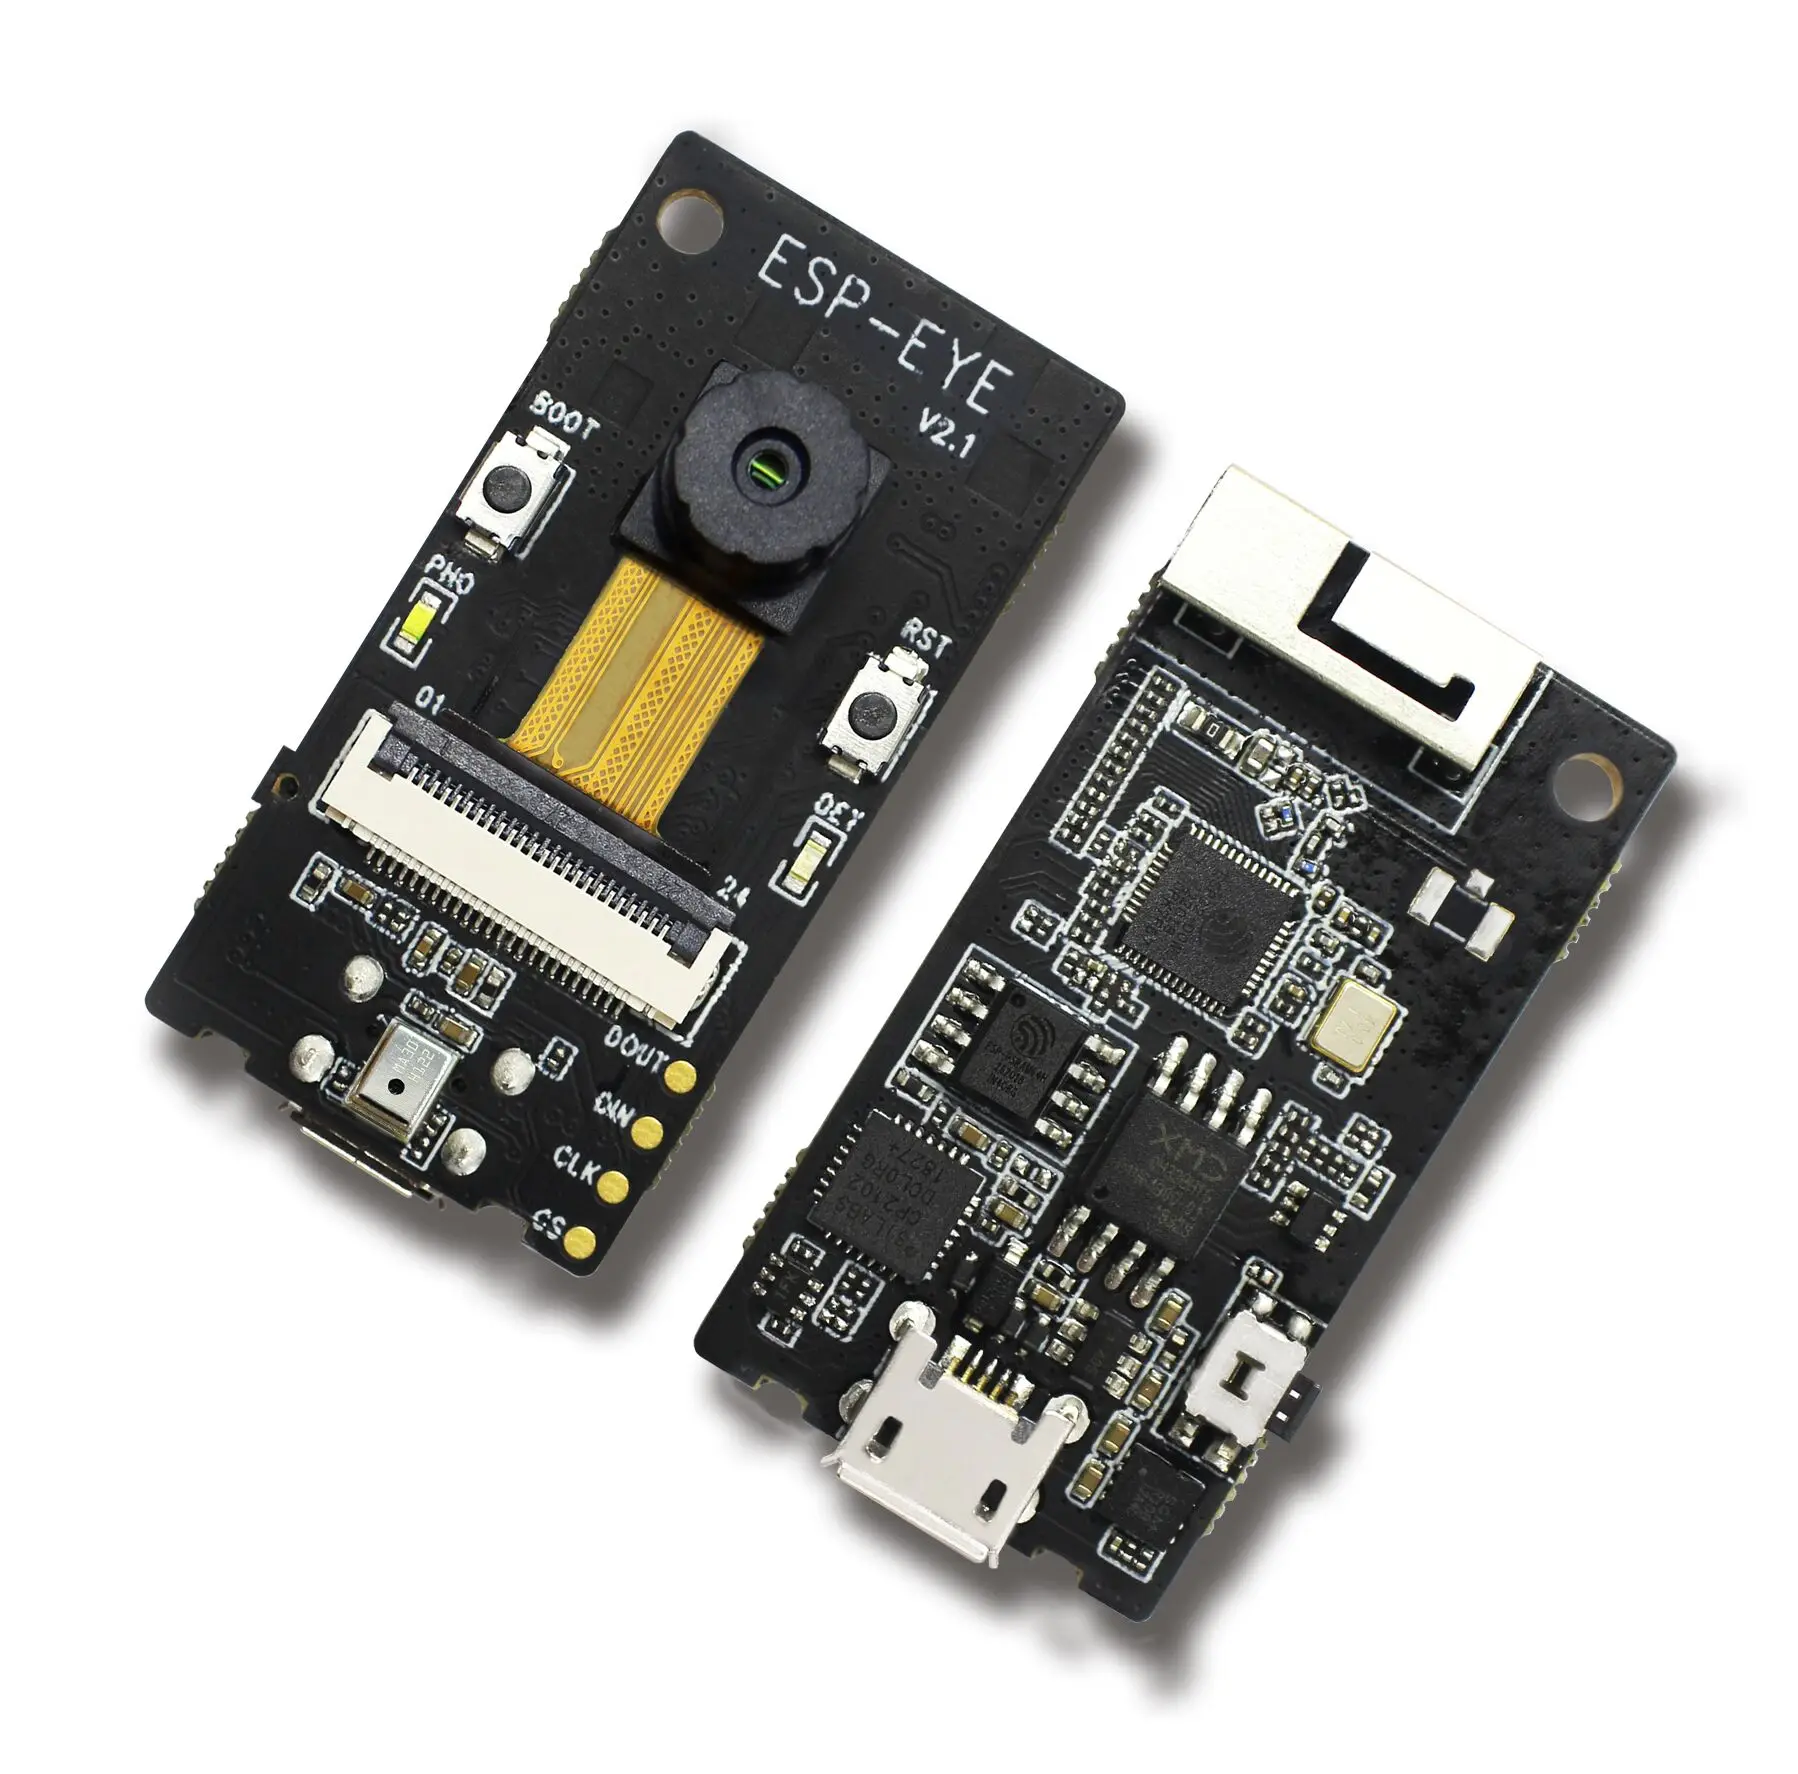 

ESP-EYE Development board WIFI image transmission support MicroUSB debugging power supply ESP32 chip